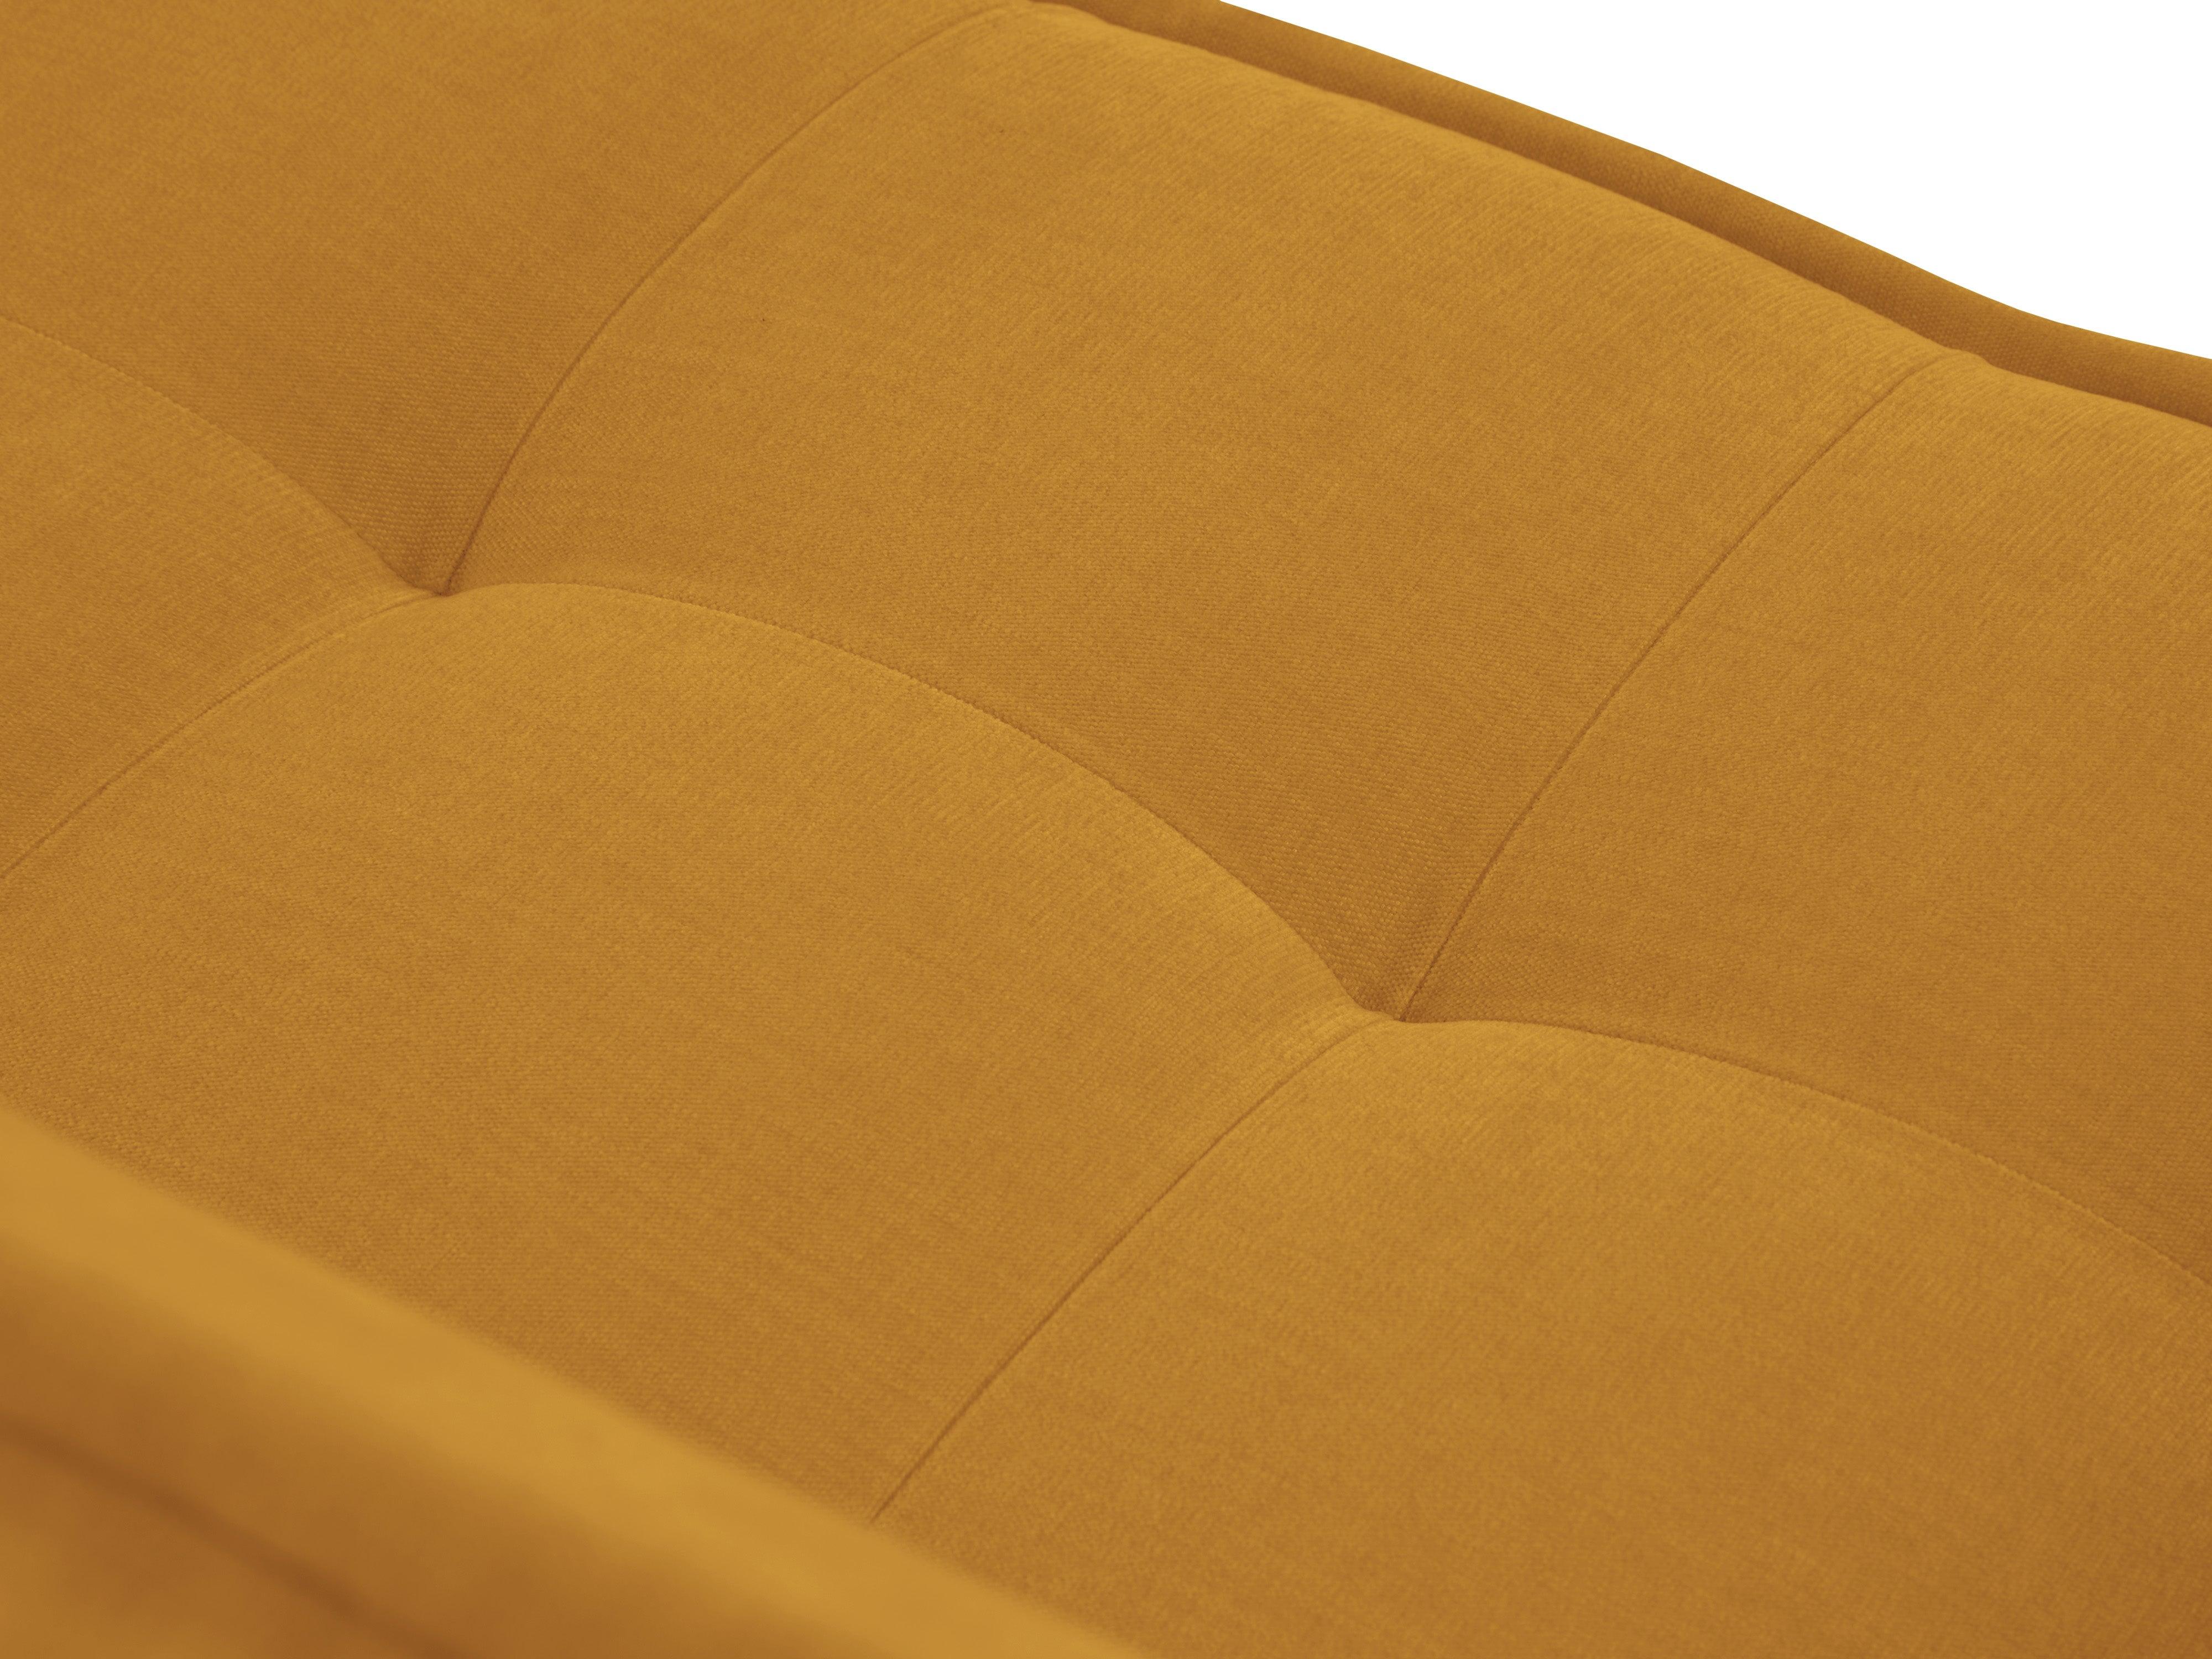 Sofa otwarta 5-osobowa VERLET musztardowy Interieurs 86    Eye on Design